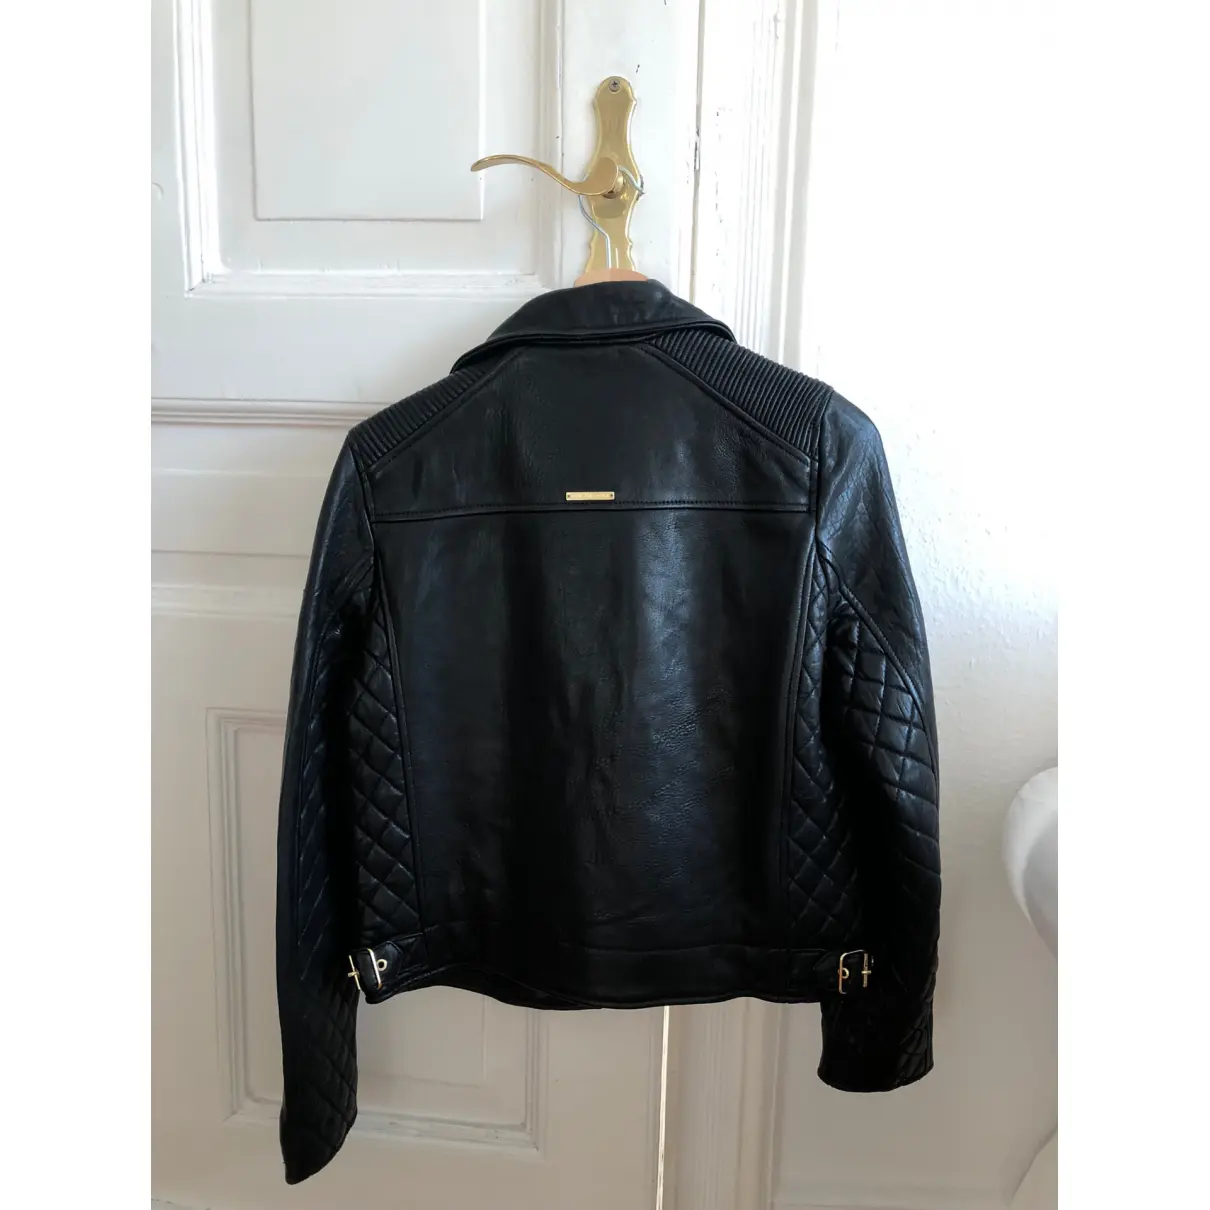 Buy Holland Cooper Leather jacket online